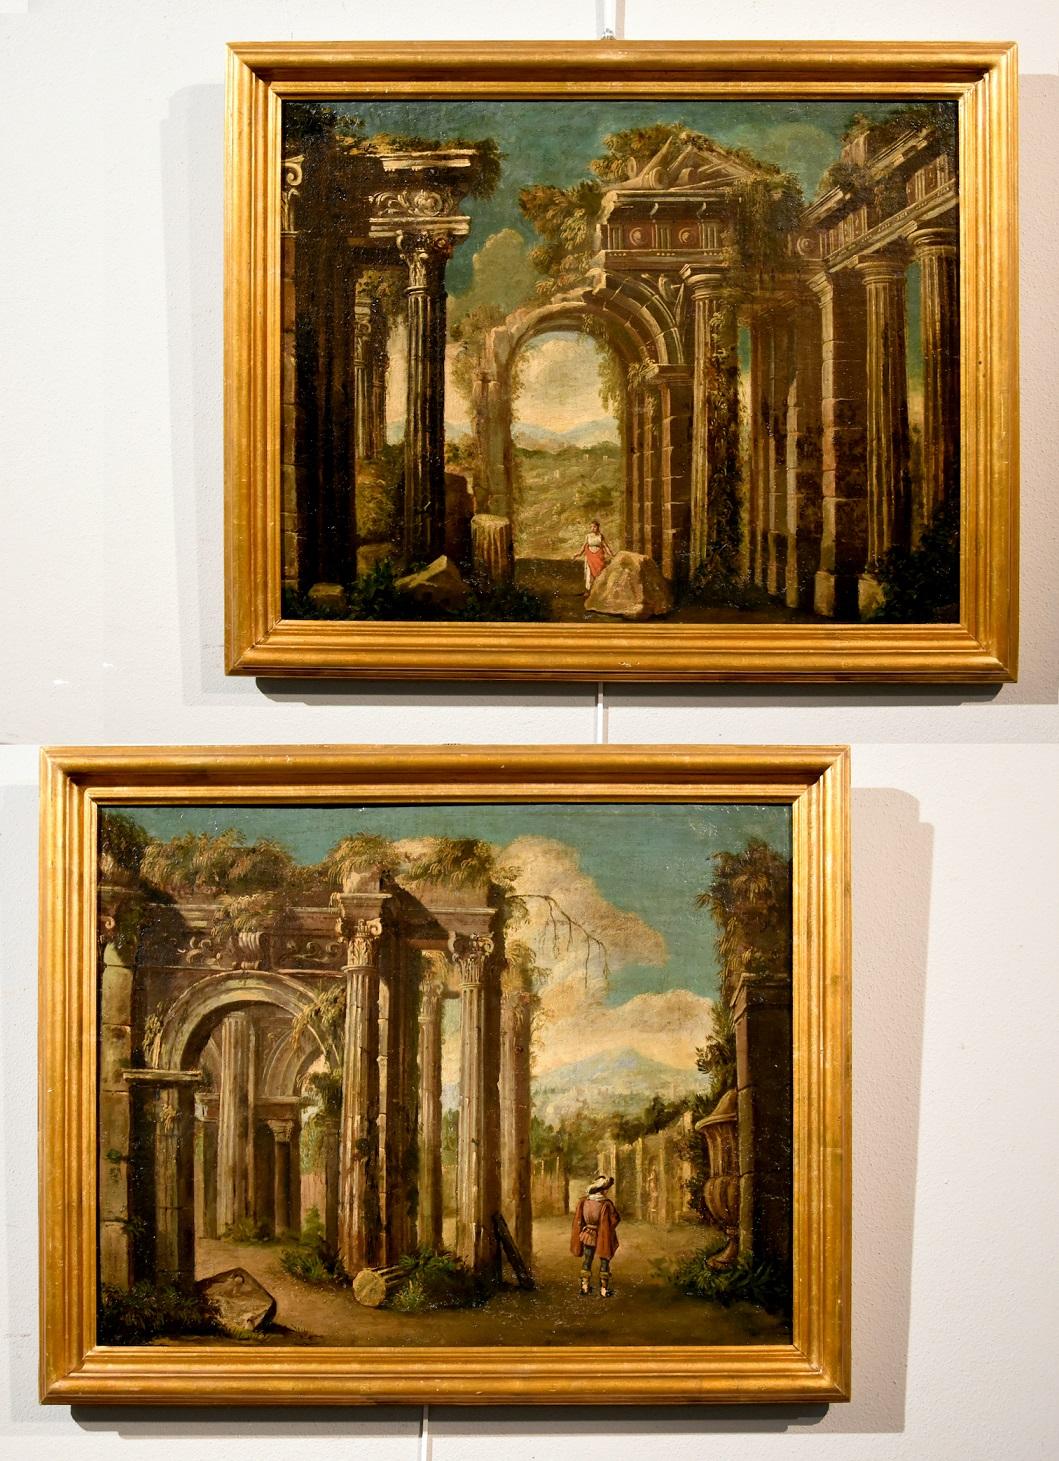 Ruins Landscape Codazzi Paint Oil on canvas Old master 18th Century Roma Italy - Painting by Niccolò Codazzi (Naples, 1642 - Genoa, 1693)